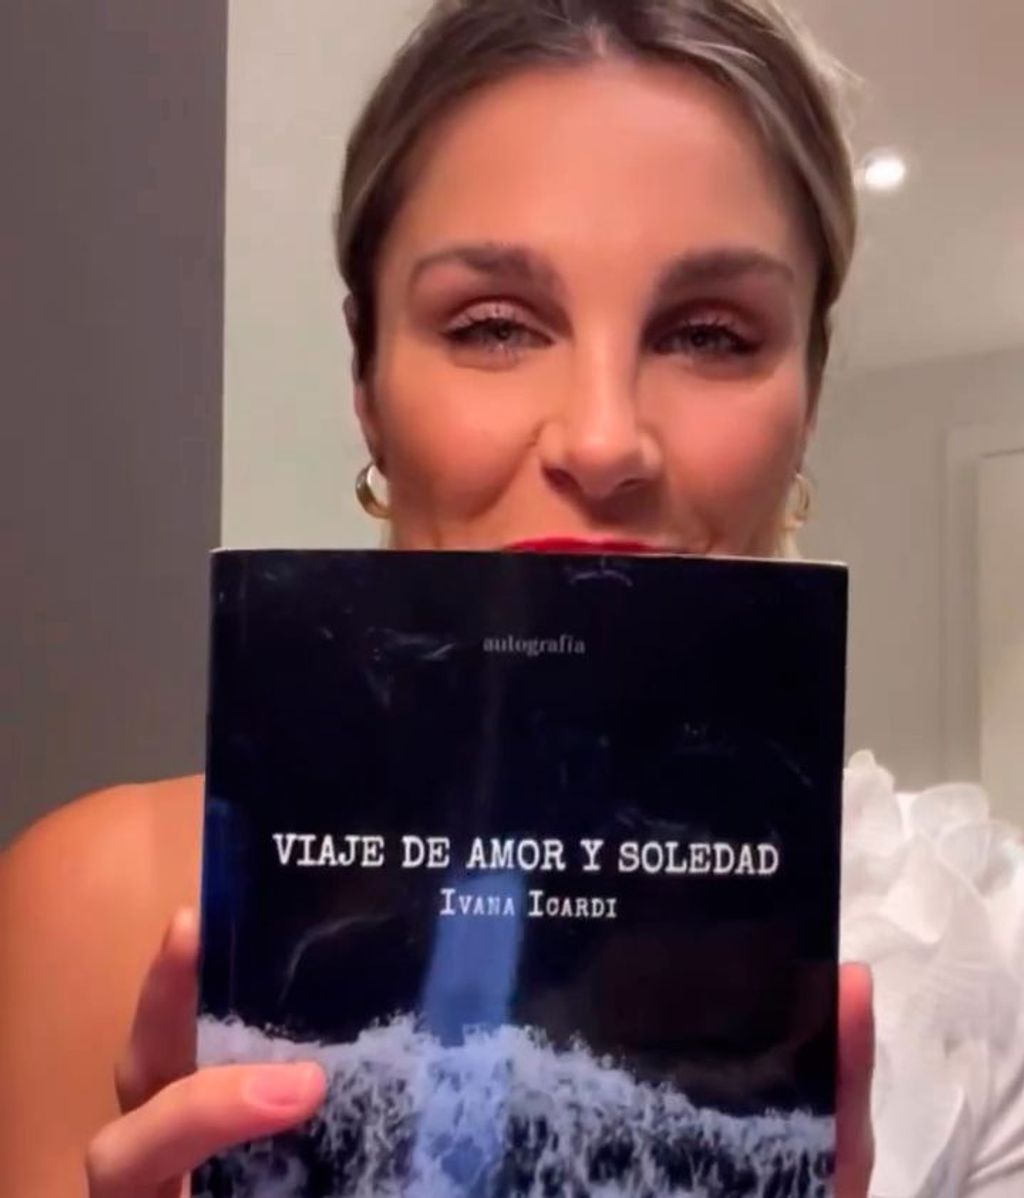 Ivana Icardi publica su primera novela